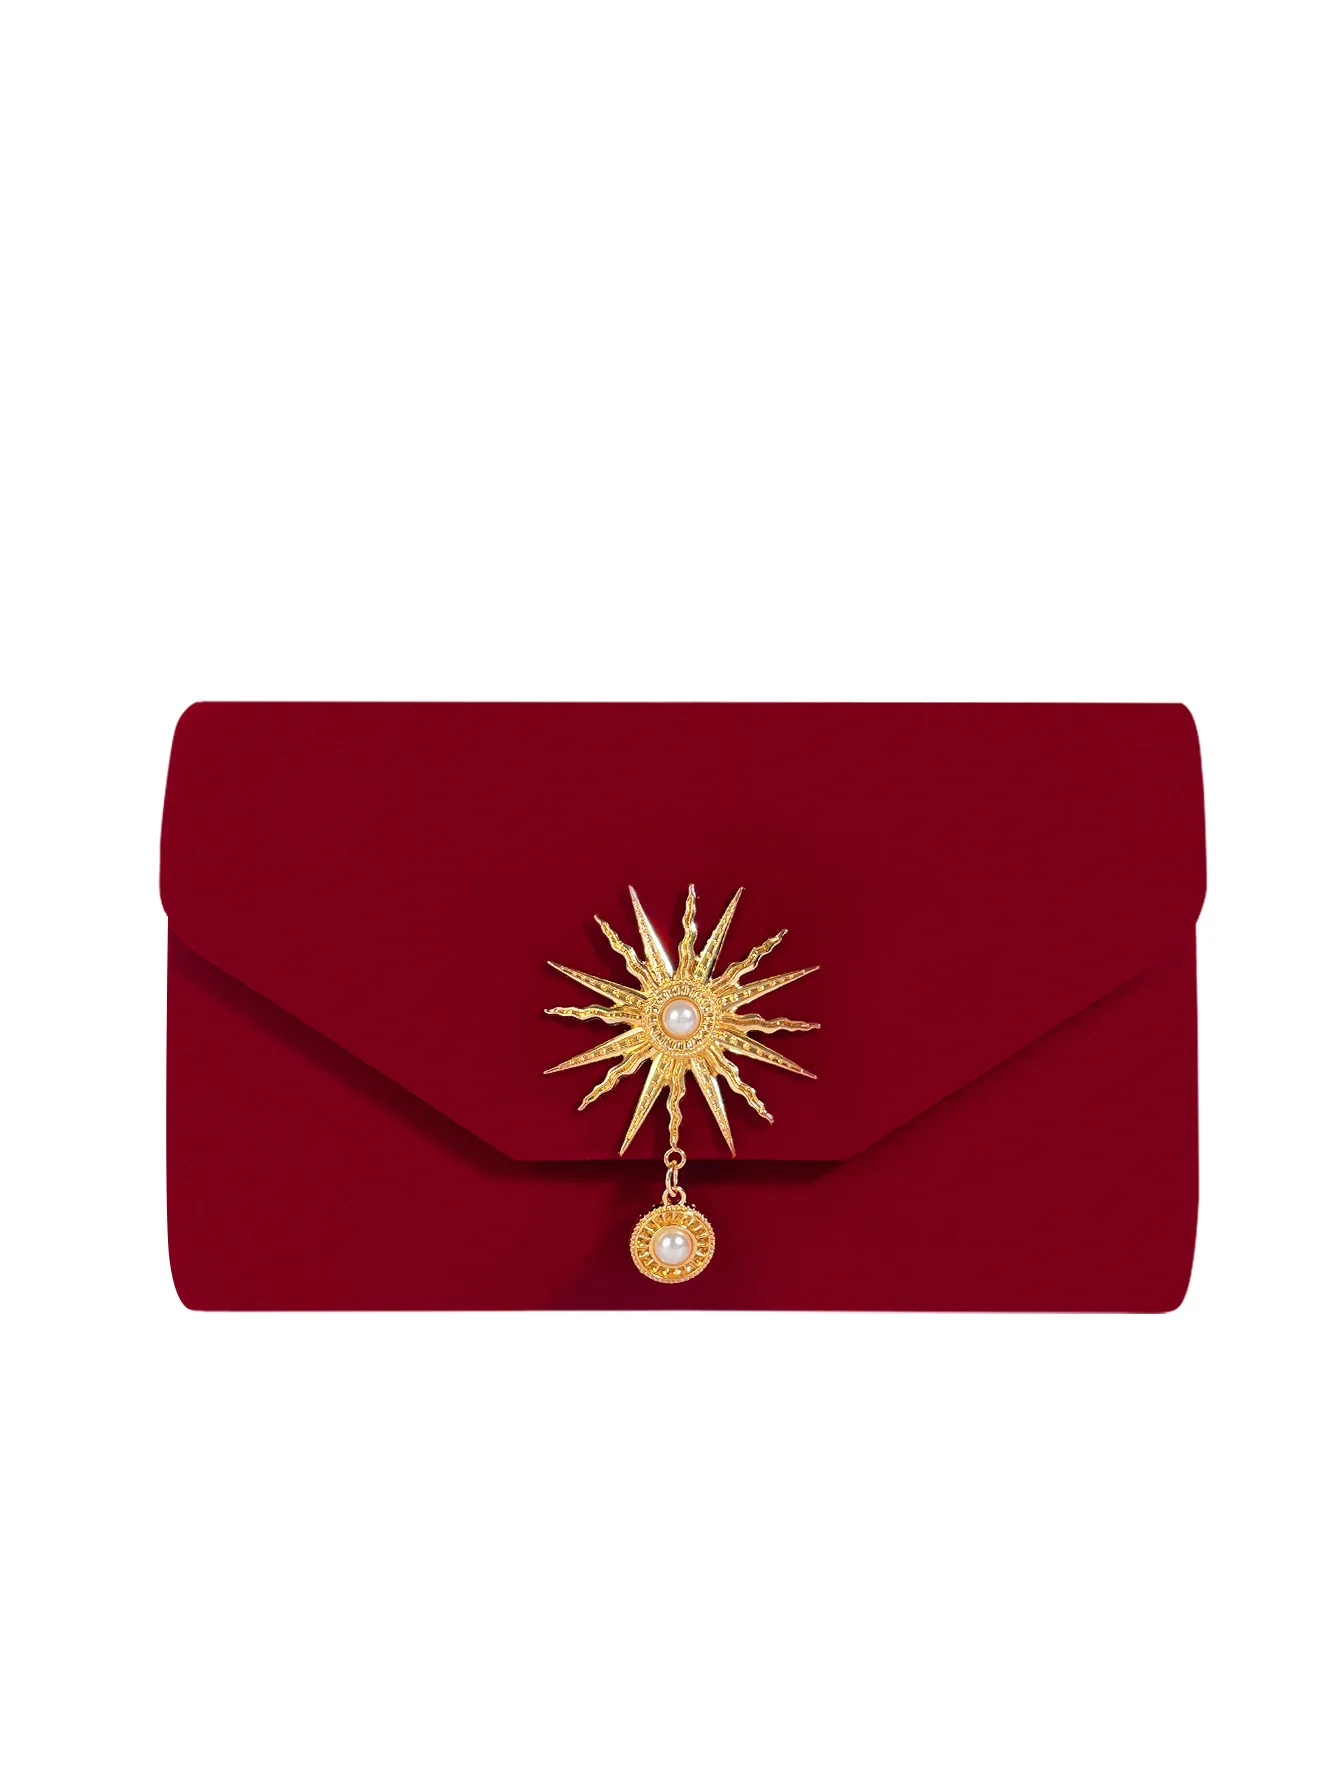 Fashion Women Clutches Evening Handbag Velour Envelope Purse with Pearl ... - $49.24